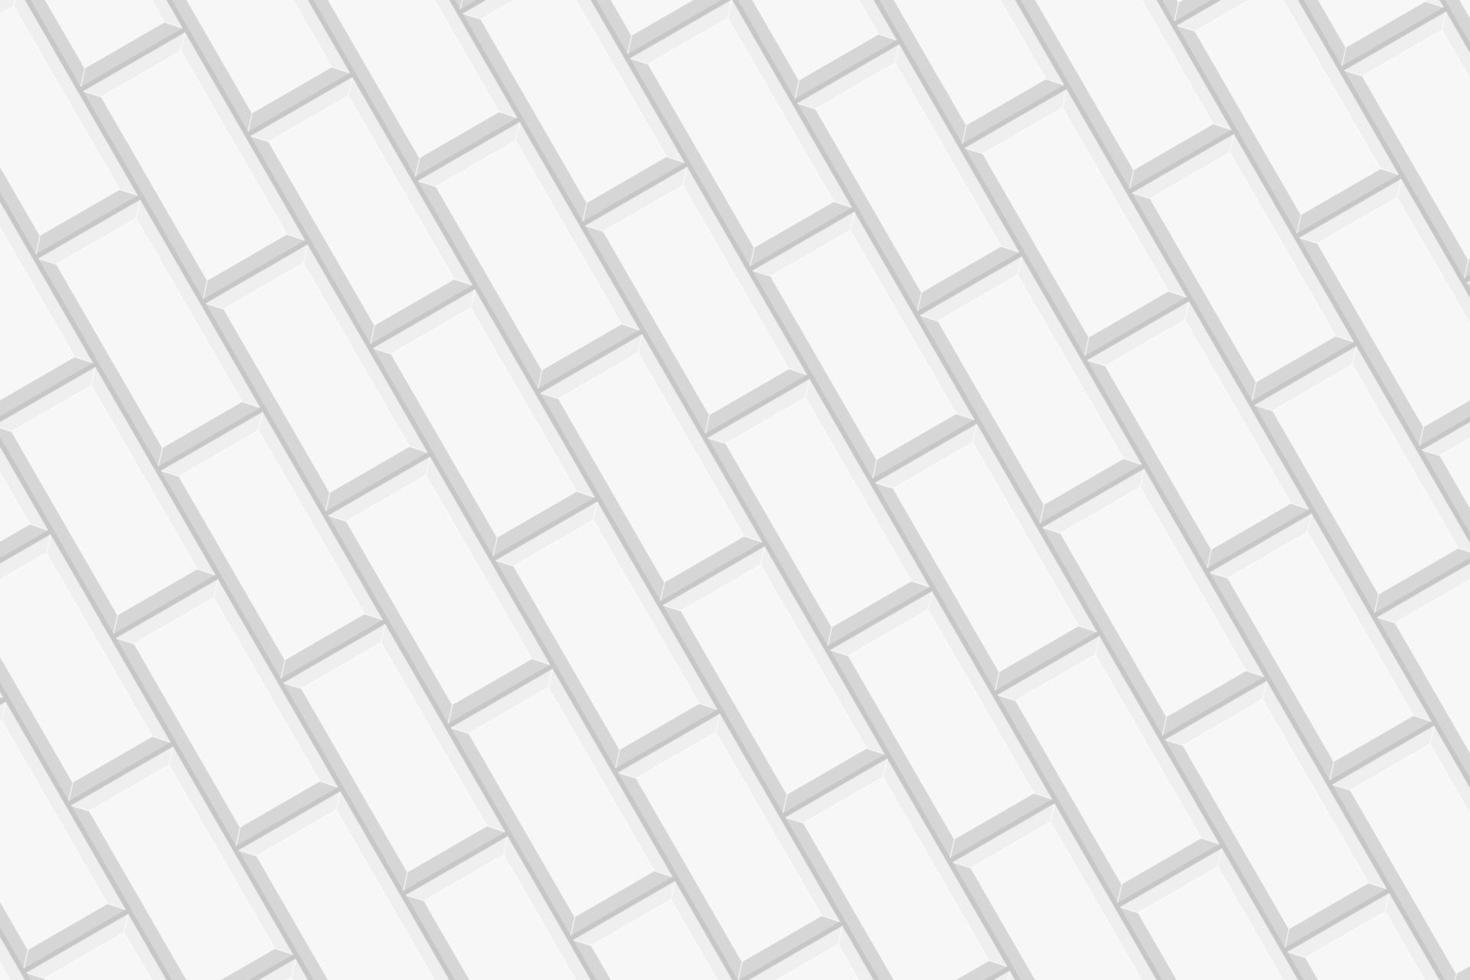 blanco rectángulos loseta en diagonal acuerdo. cerámico o Roca ladrillo pared antecedentes. cocina protector contra salpicaduras o baño piso sin costura modelo. fachada exterior textura vector